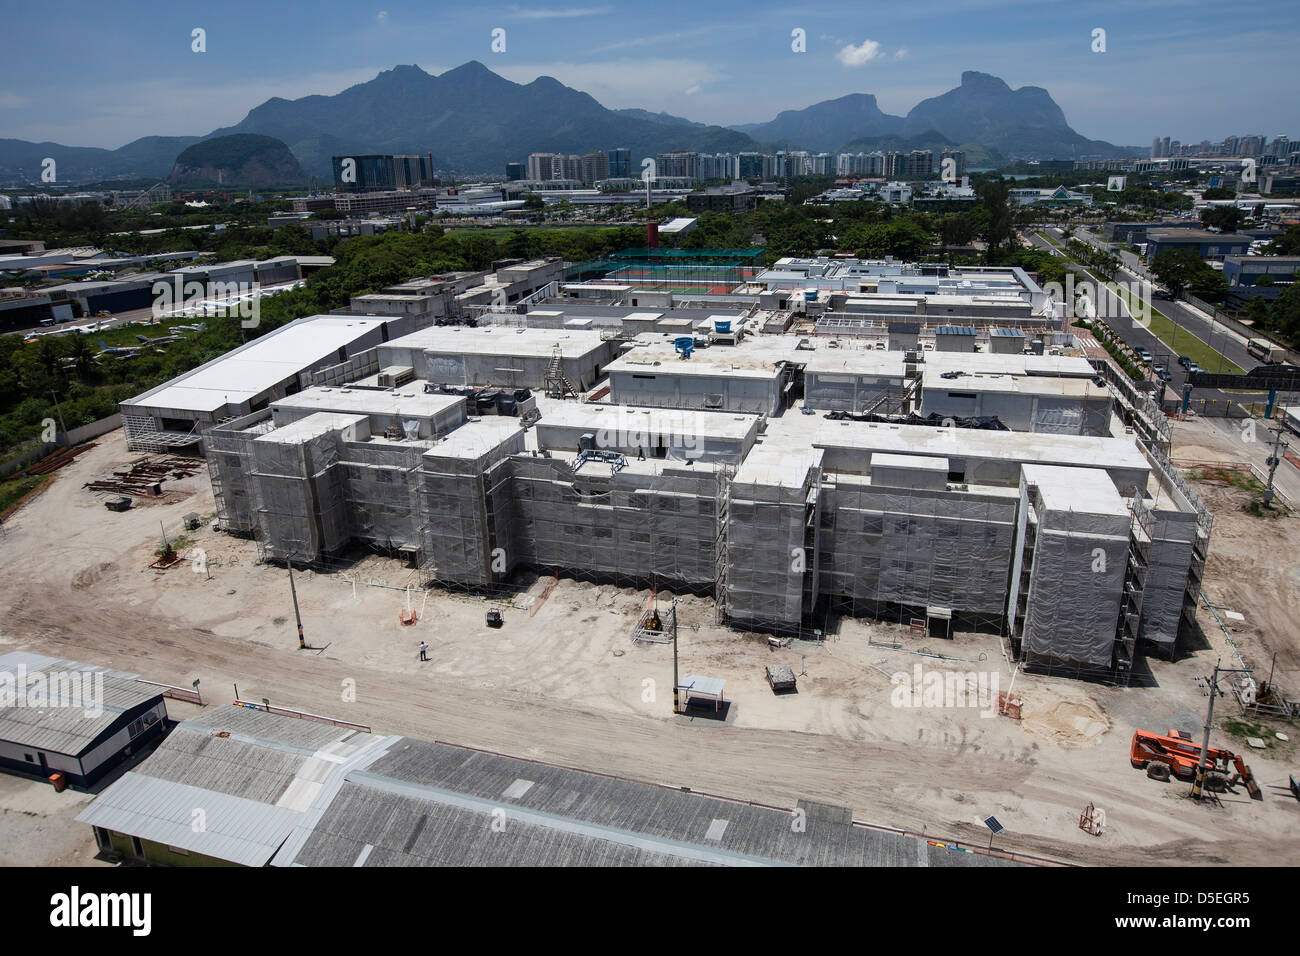 Barra da Tijuca borough in Rio de Janeiro, Brazil. Construction of commercial buildings Real estate boom due 2016 Olympic Games Stock Photo